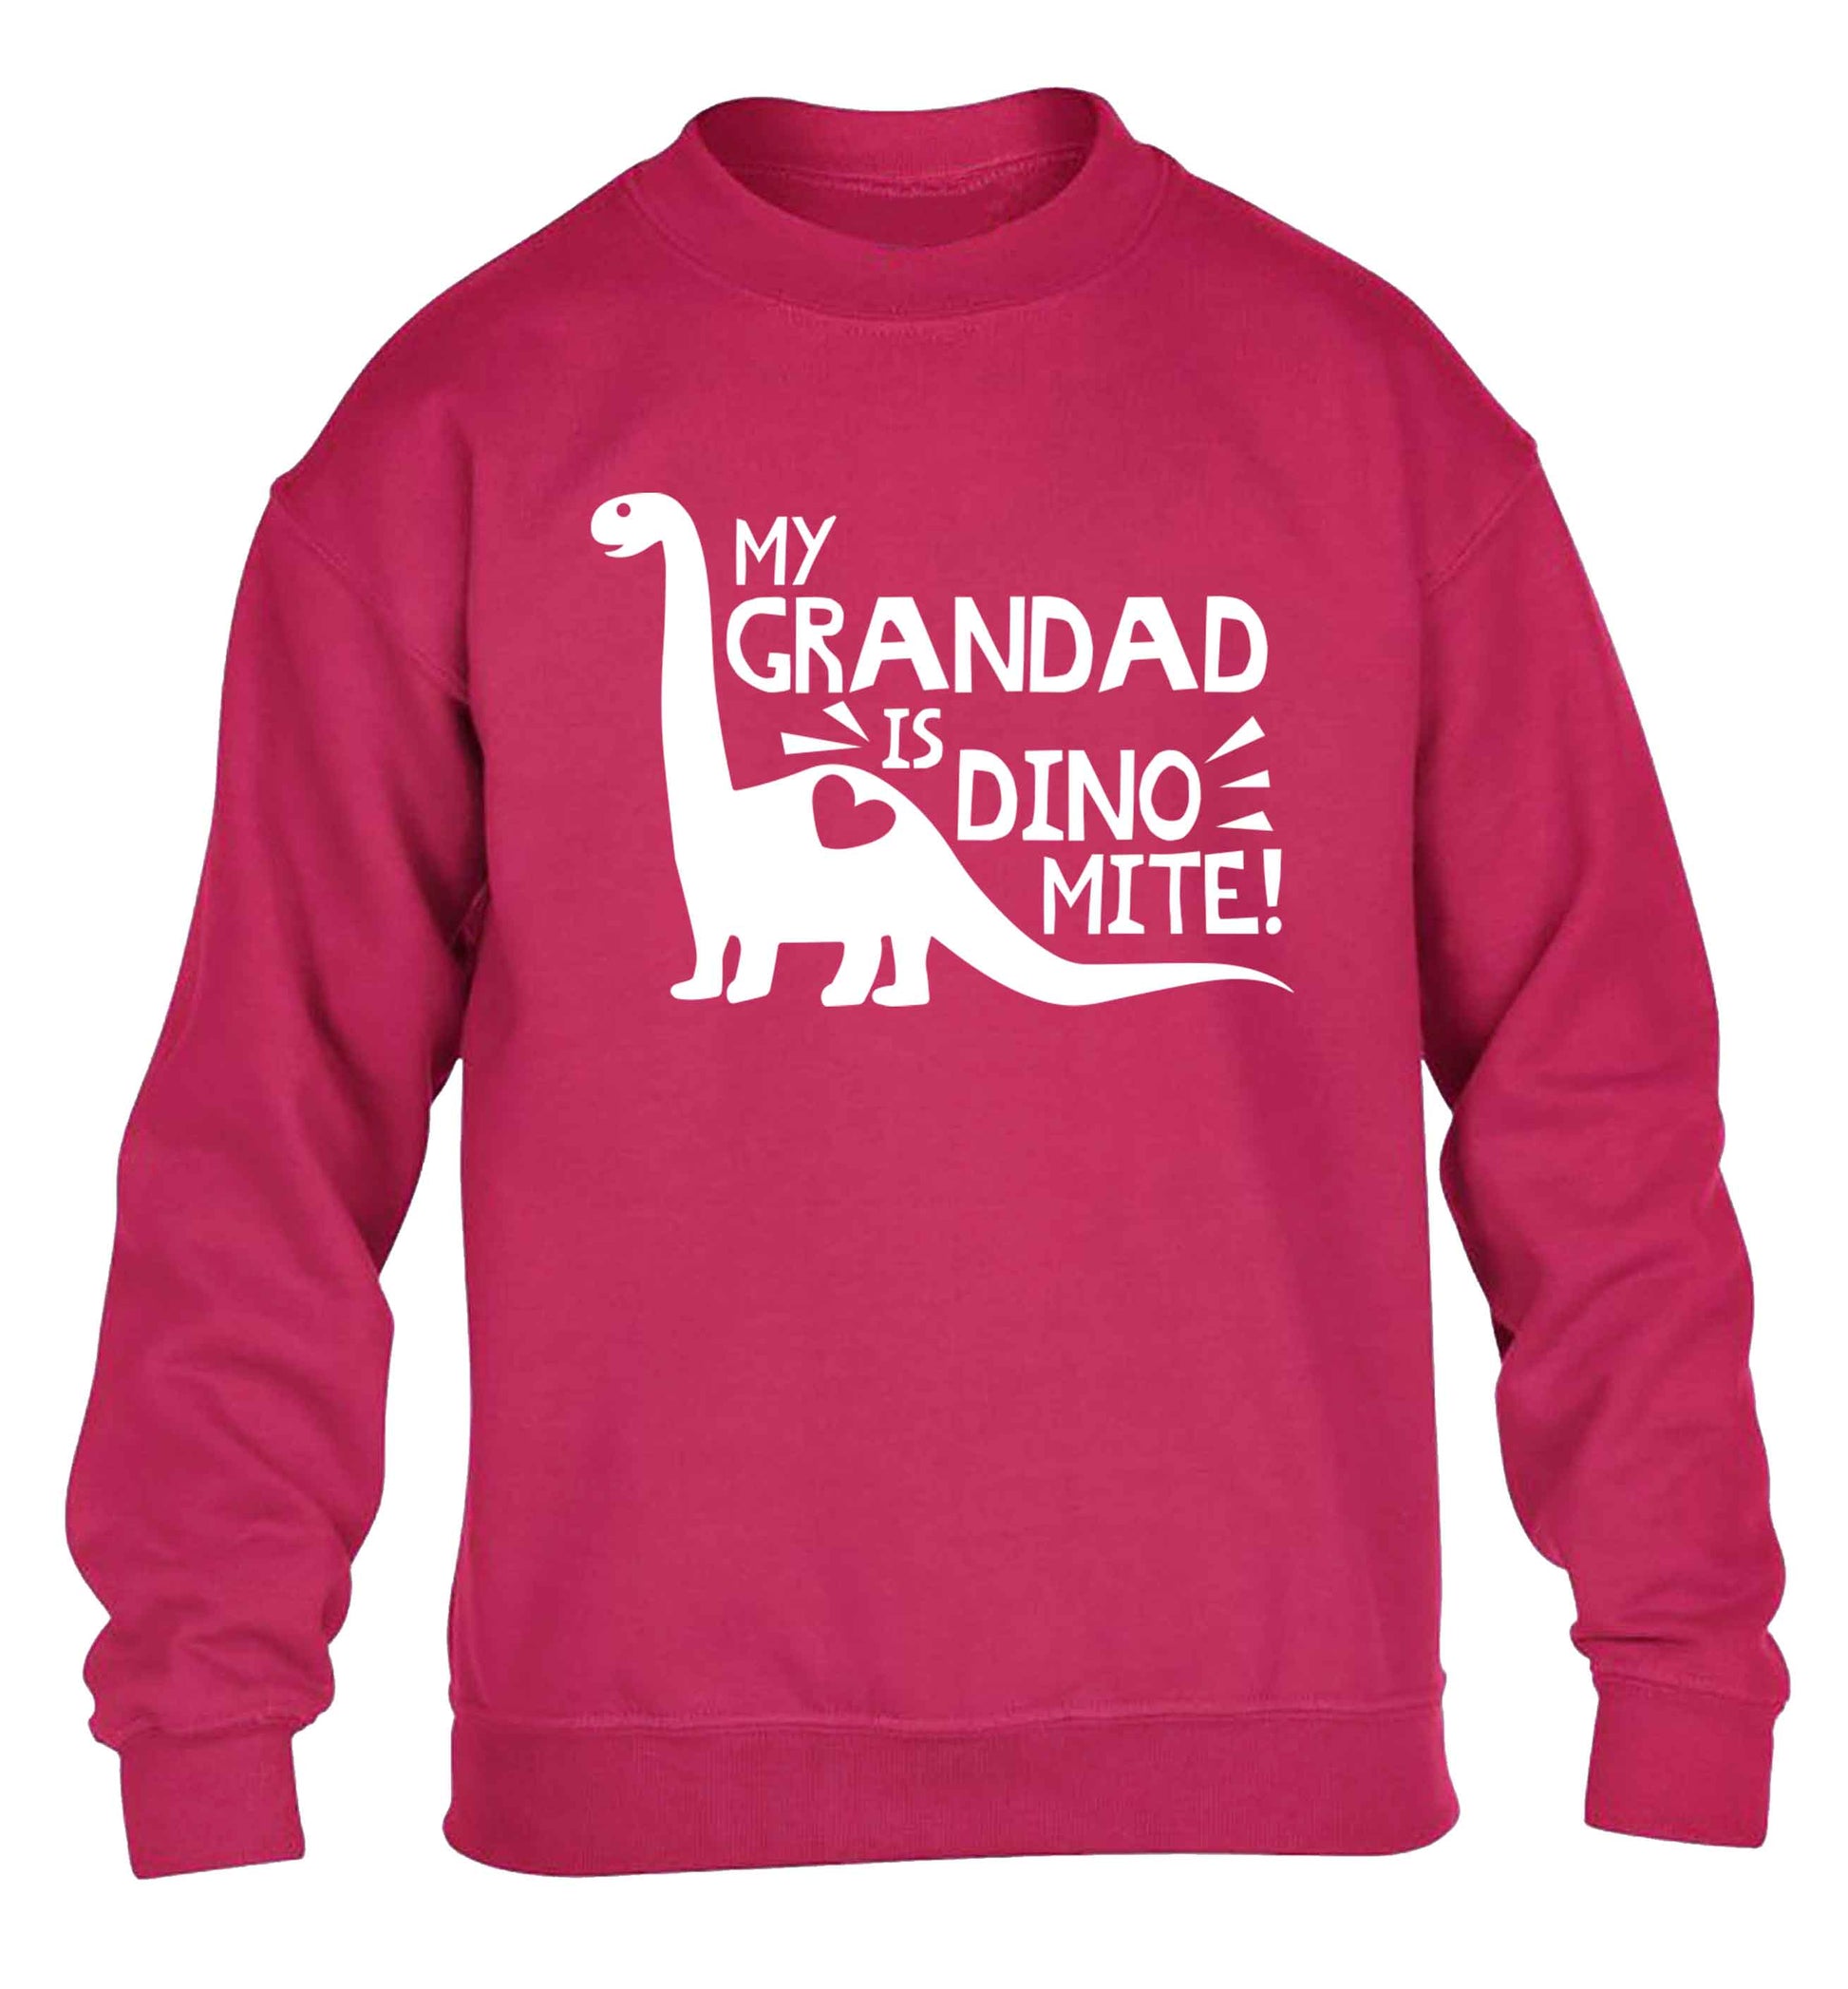 My grandad is dinomite! children's pink sweater 12-13 Years